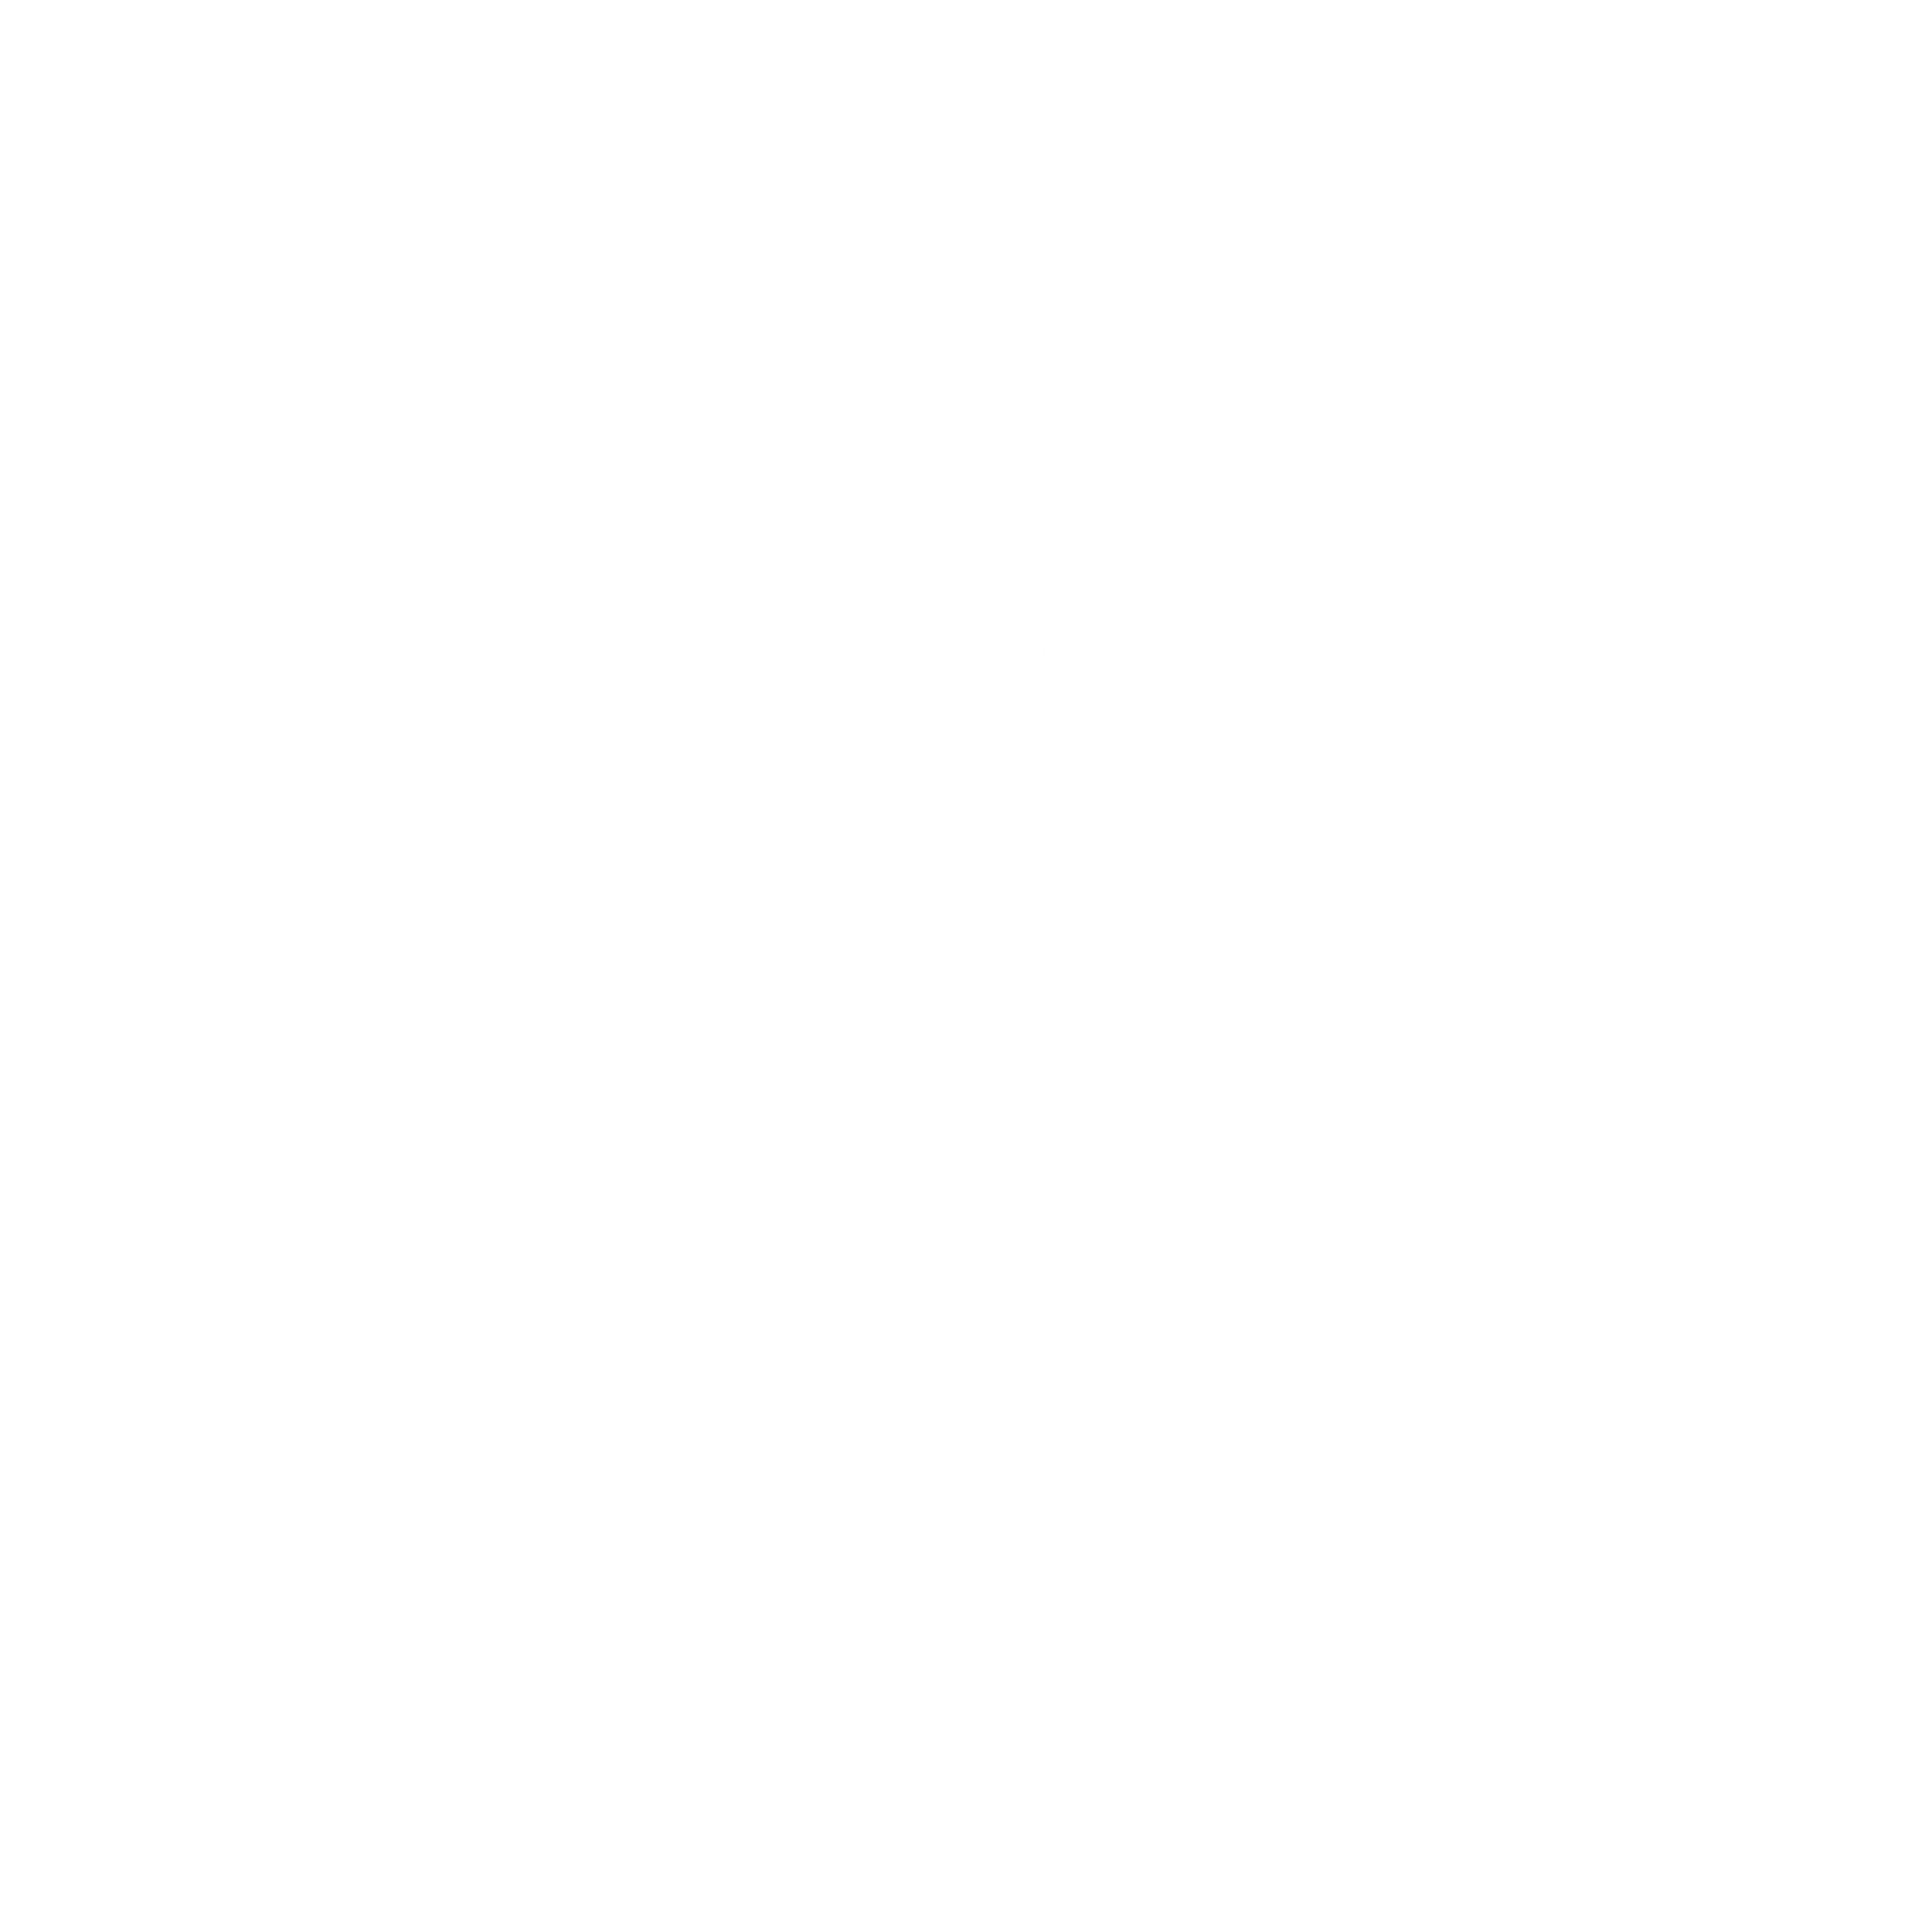 Mike Lynx